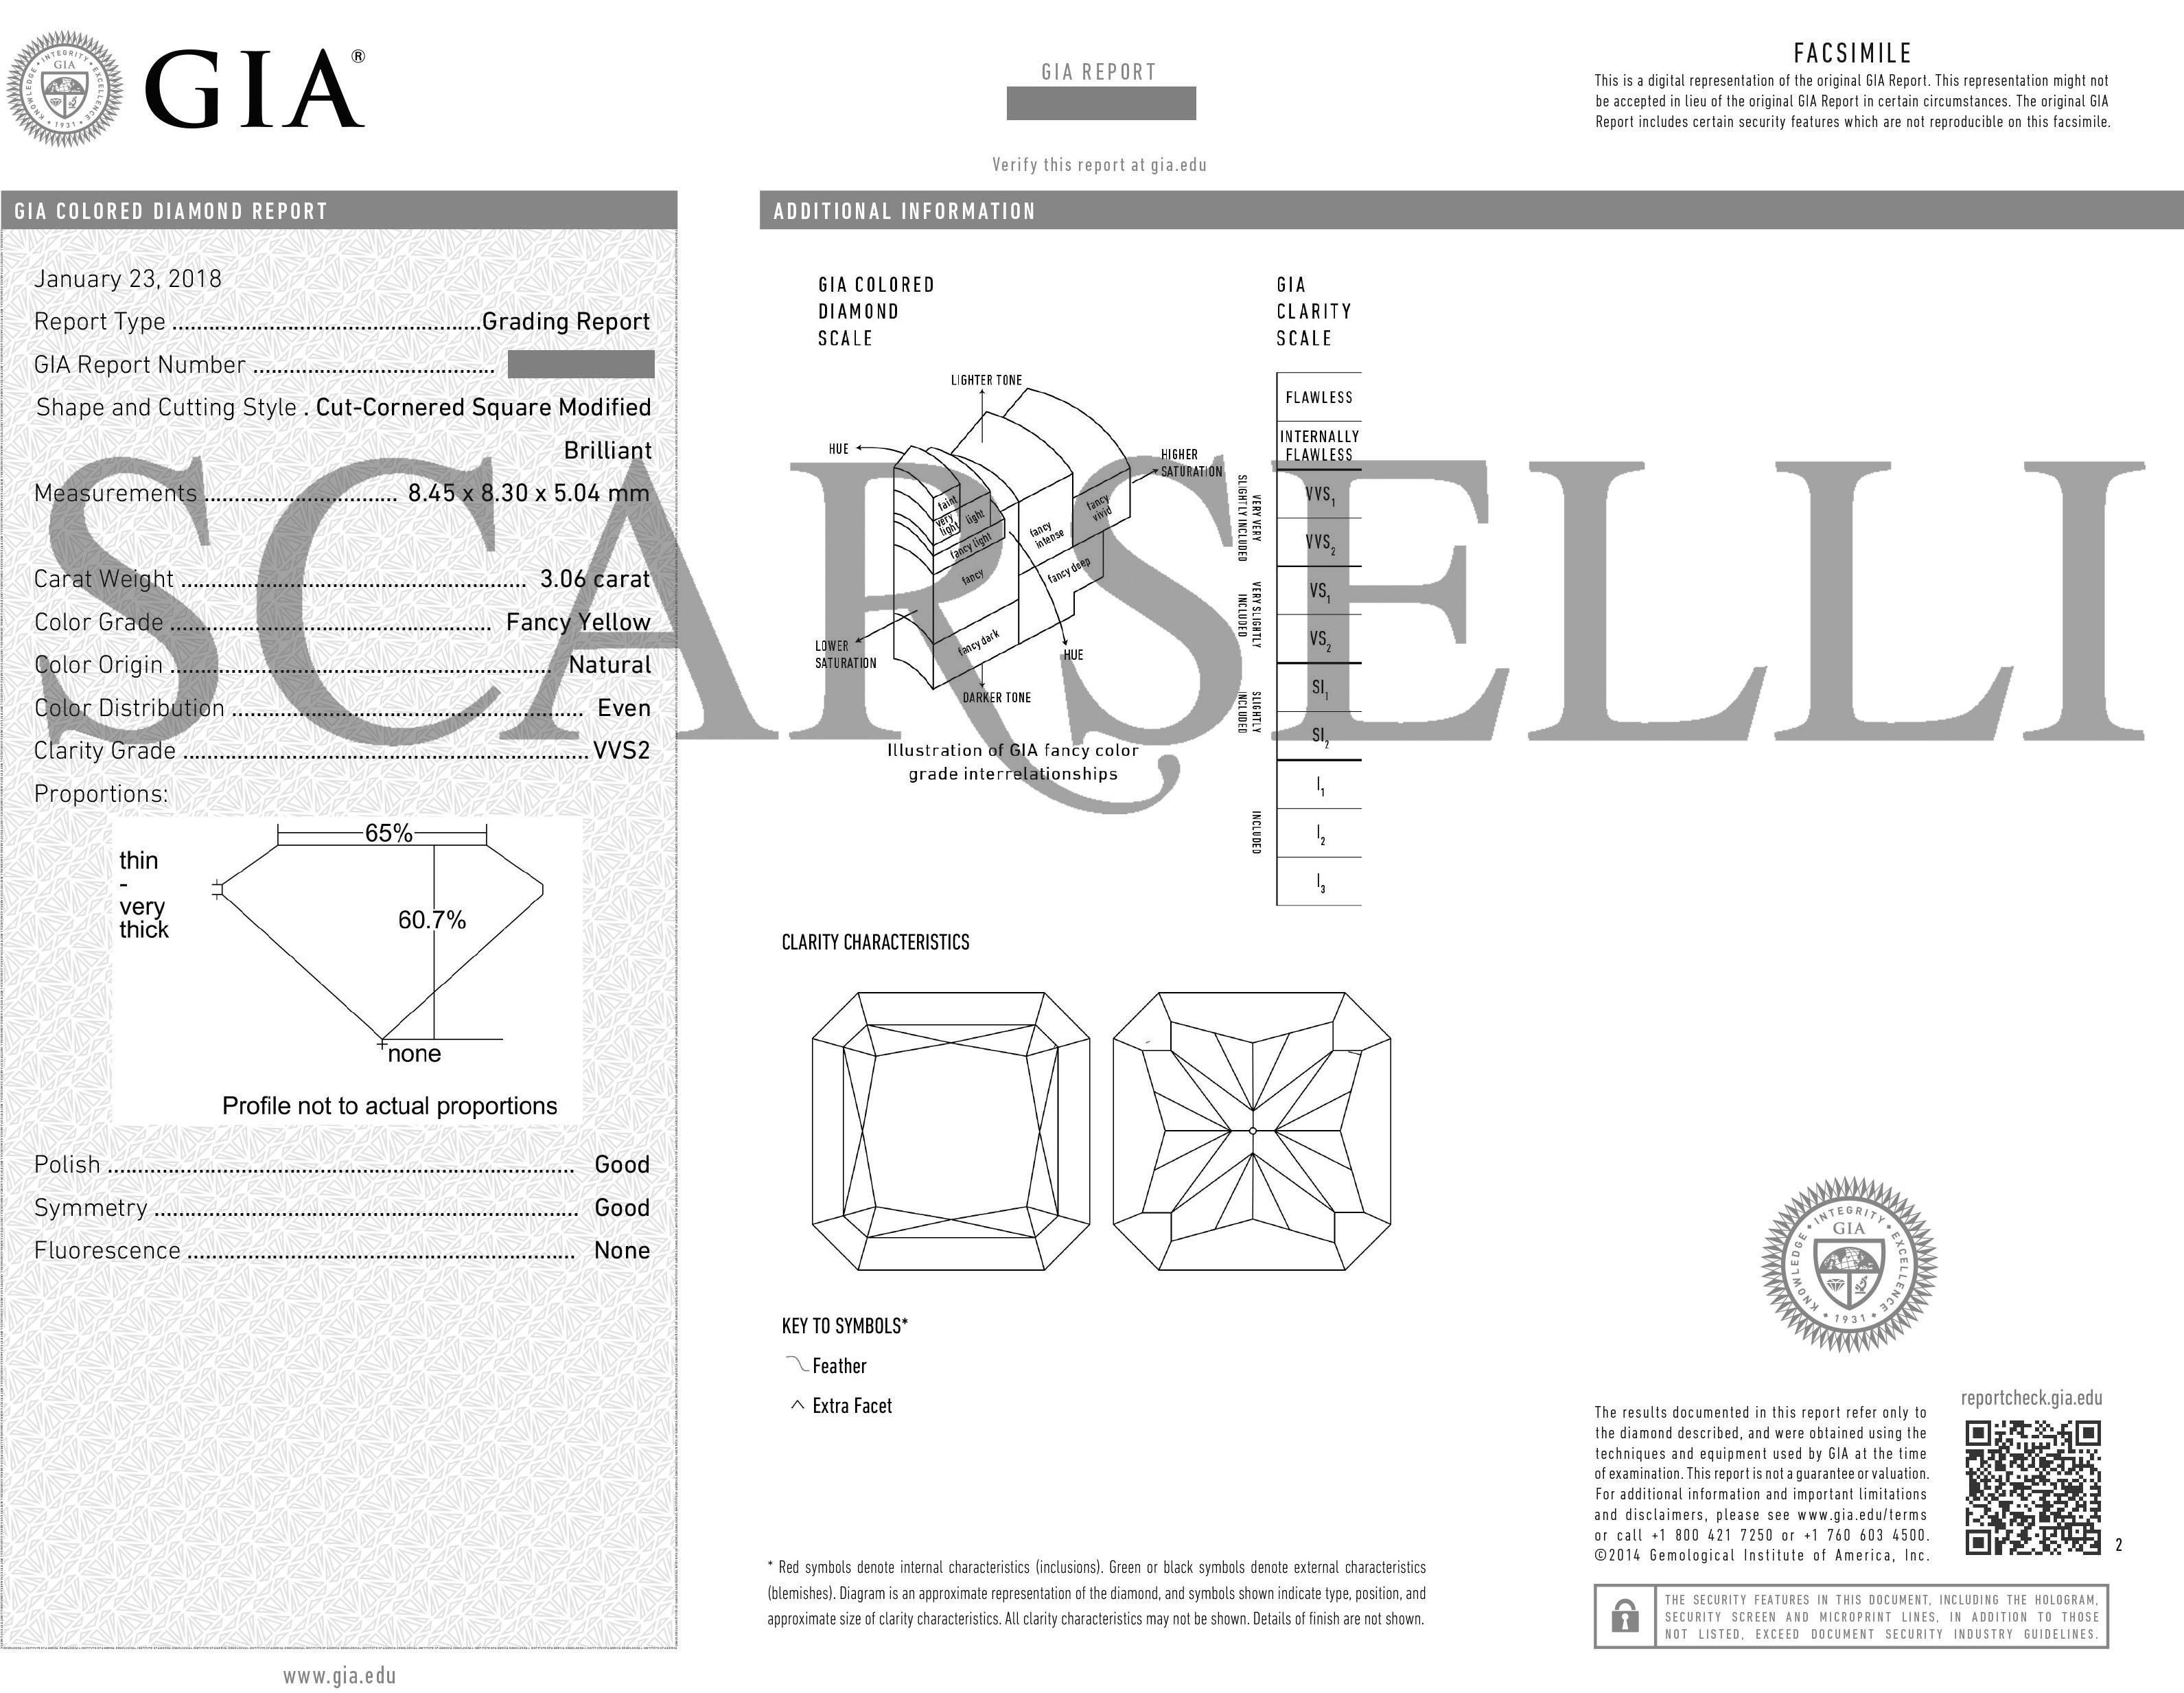 Scarselli 3 carat Fancy Yellow Diamond stud earrings with jackets GIA certified 1